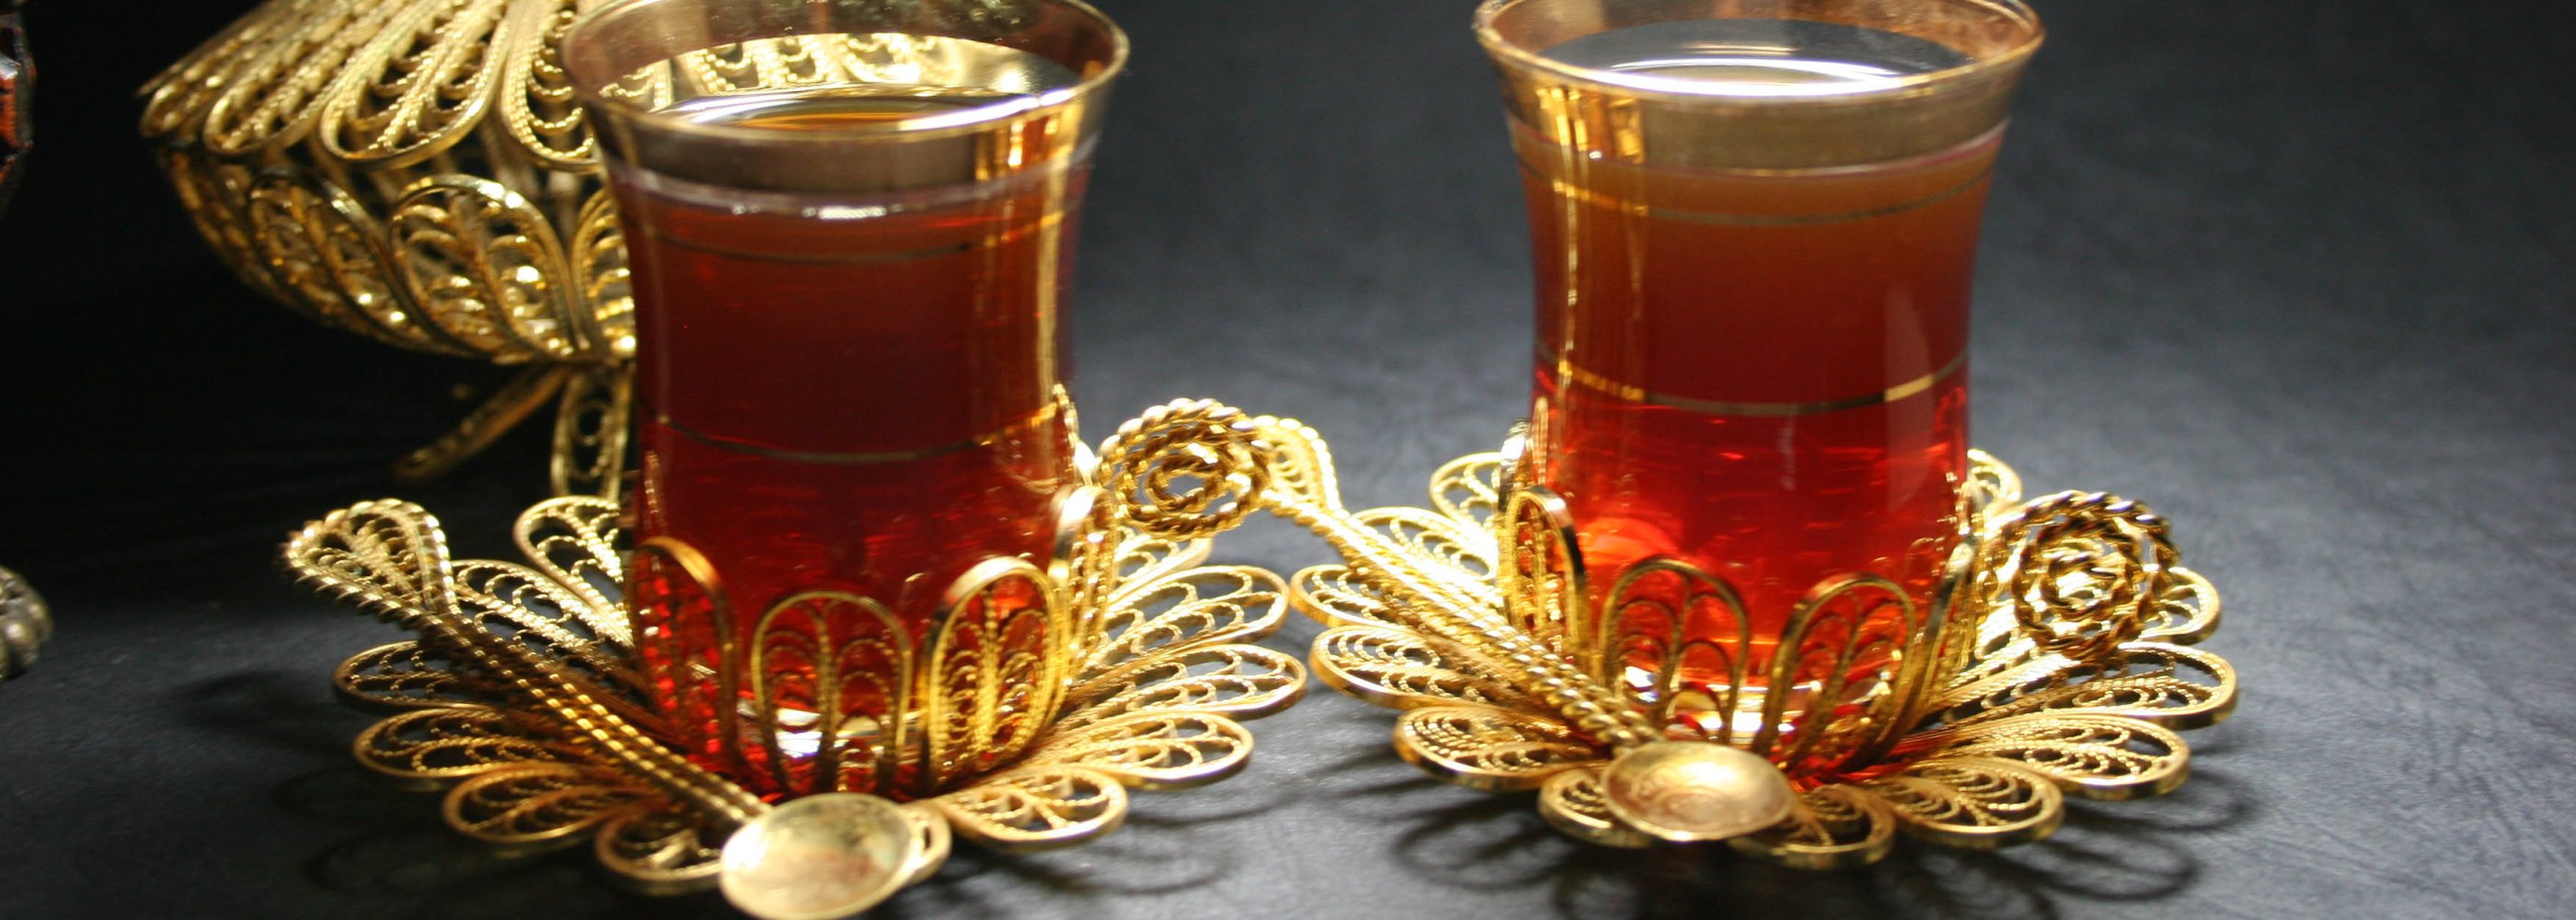 Arabic tea